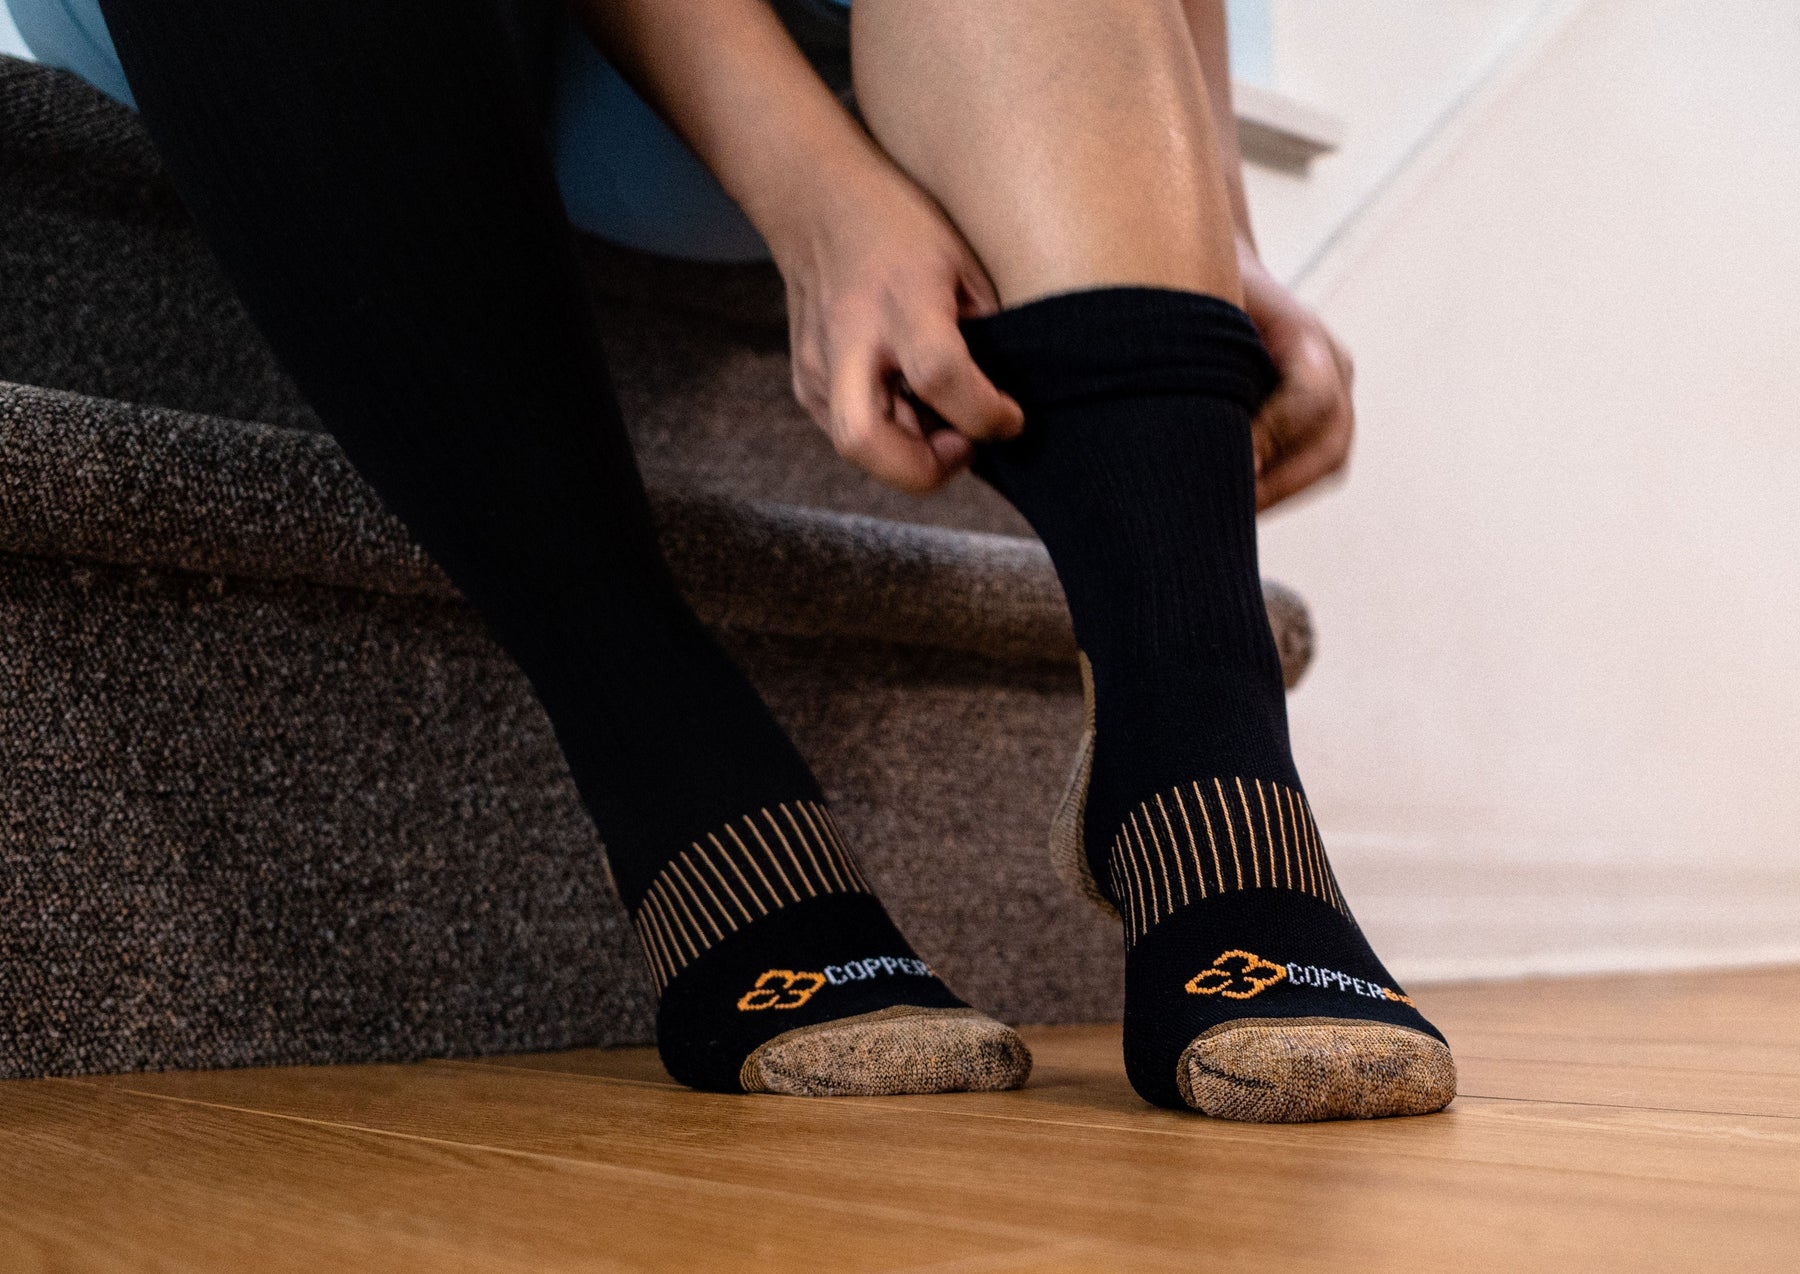 Copper Compression Knee Socks (Black) - Ladies – Copper 88